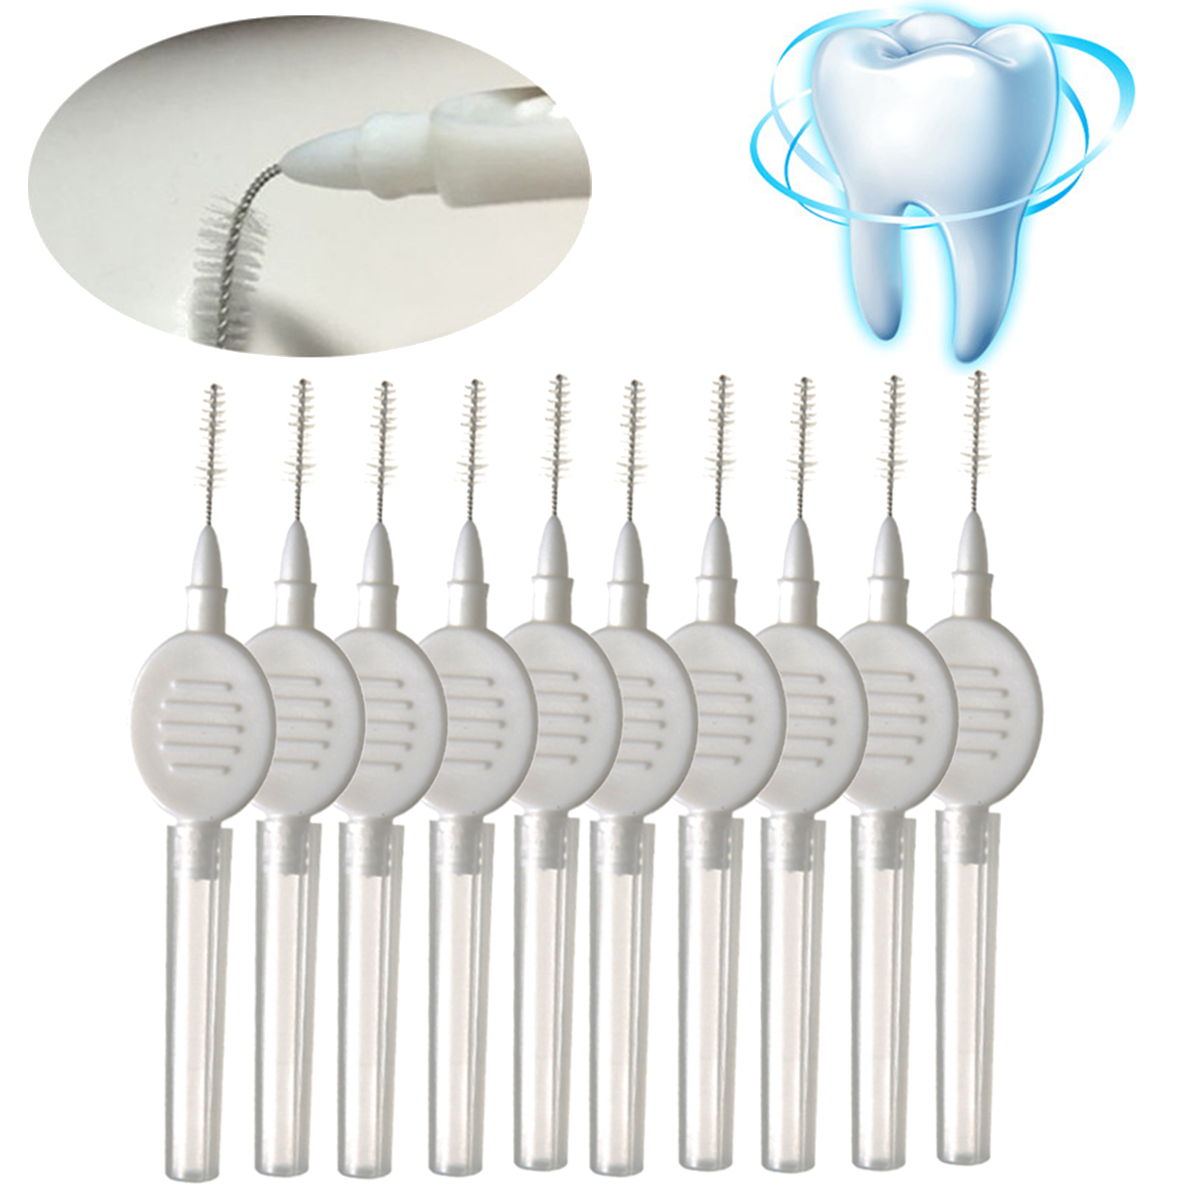 

Dupont Silk Bristle Rotating Interdental Between Teeth Floss Brush Head Replacement Dental Care